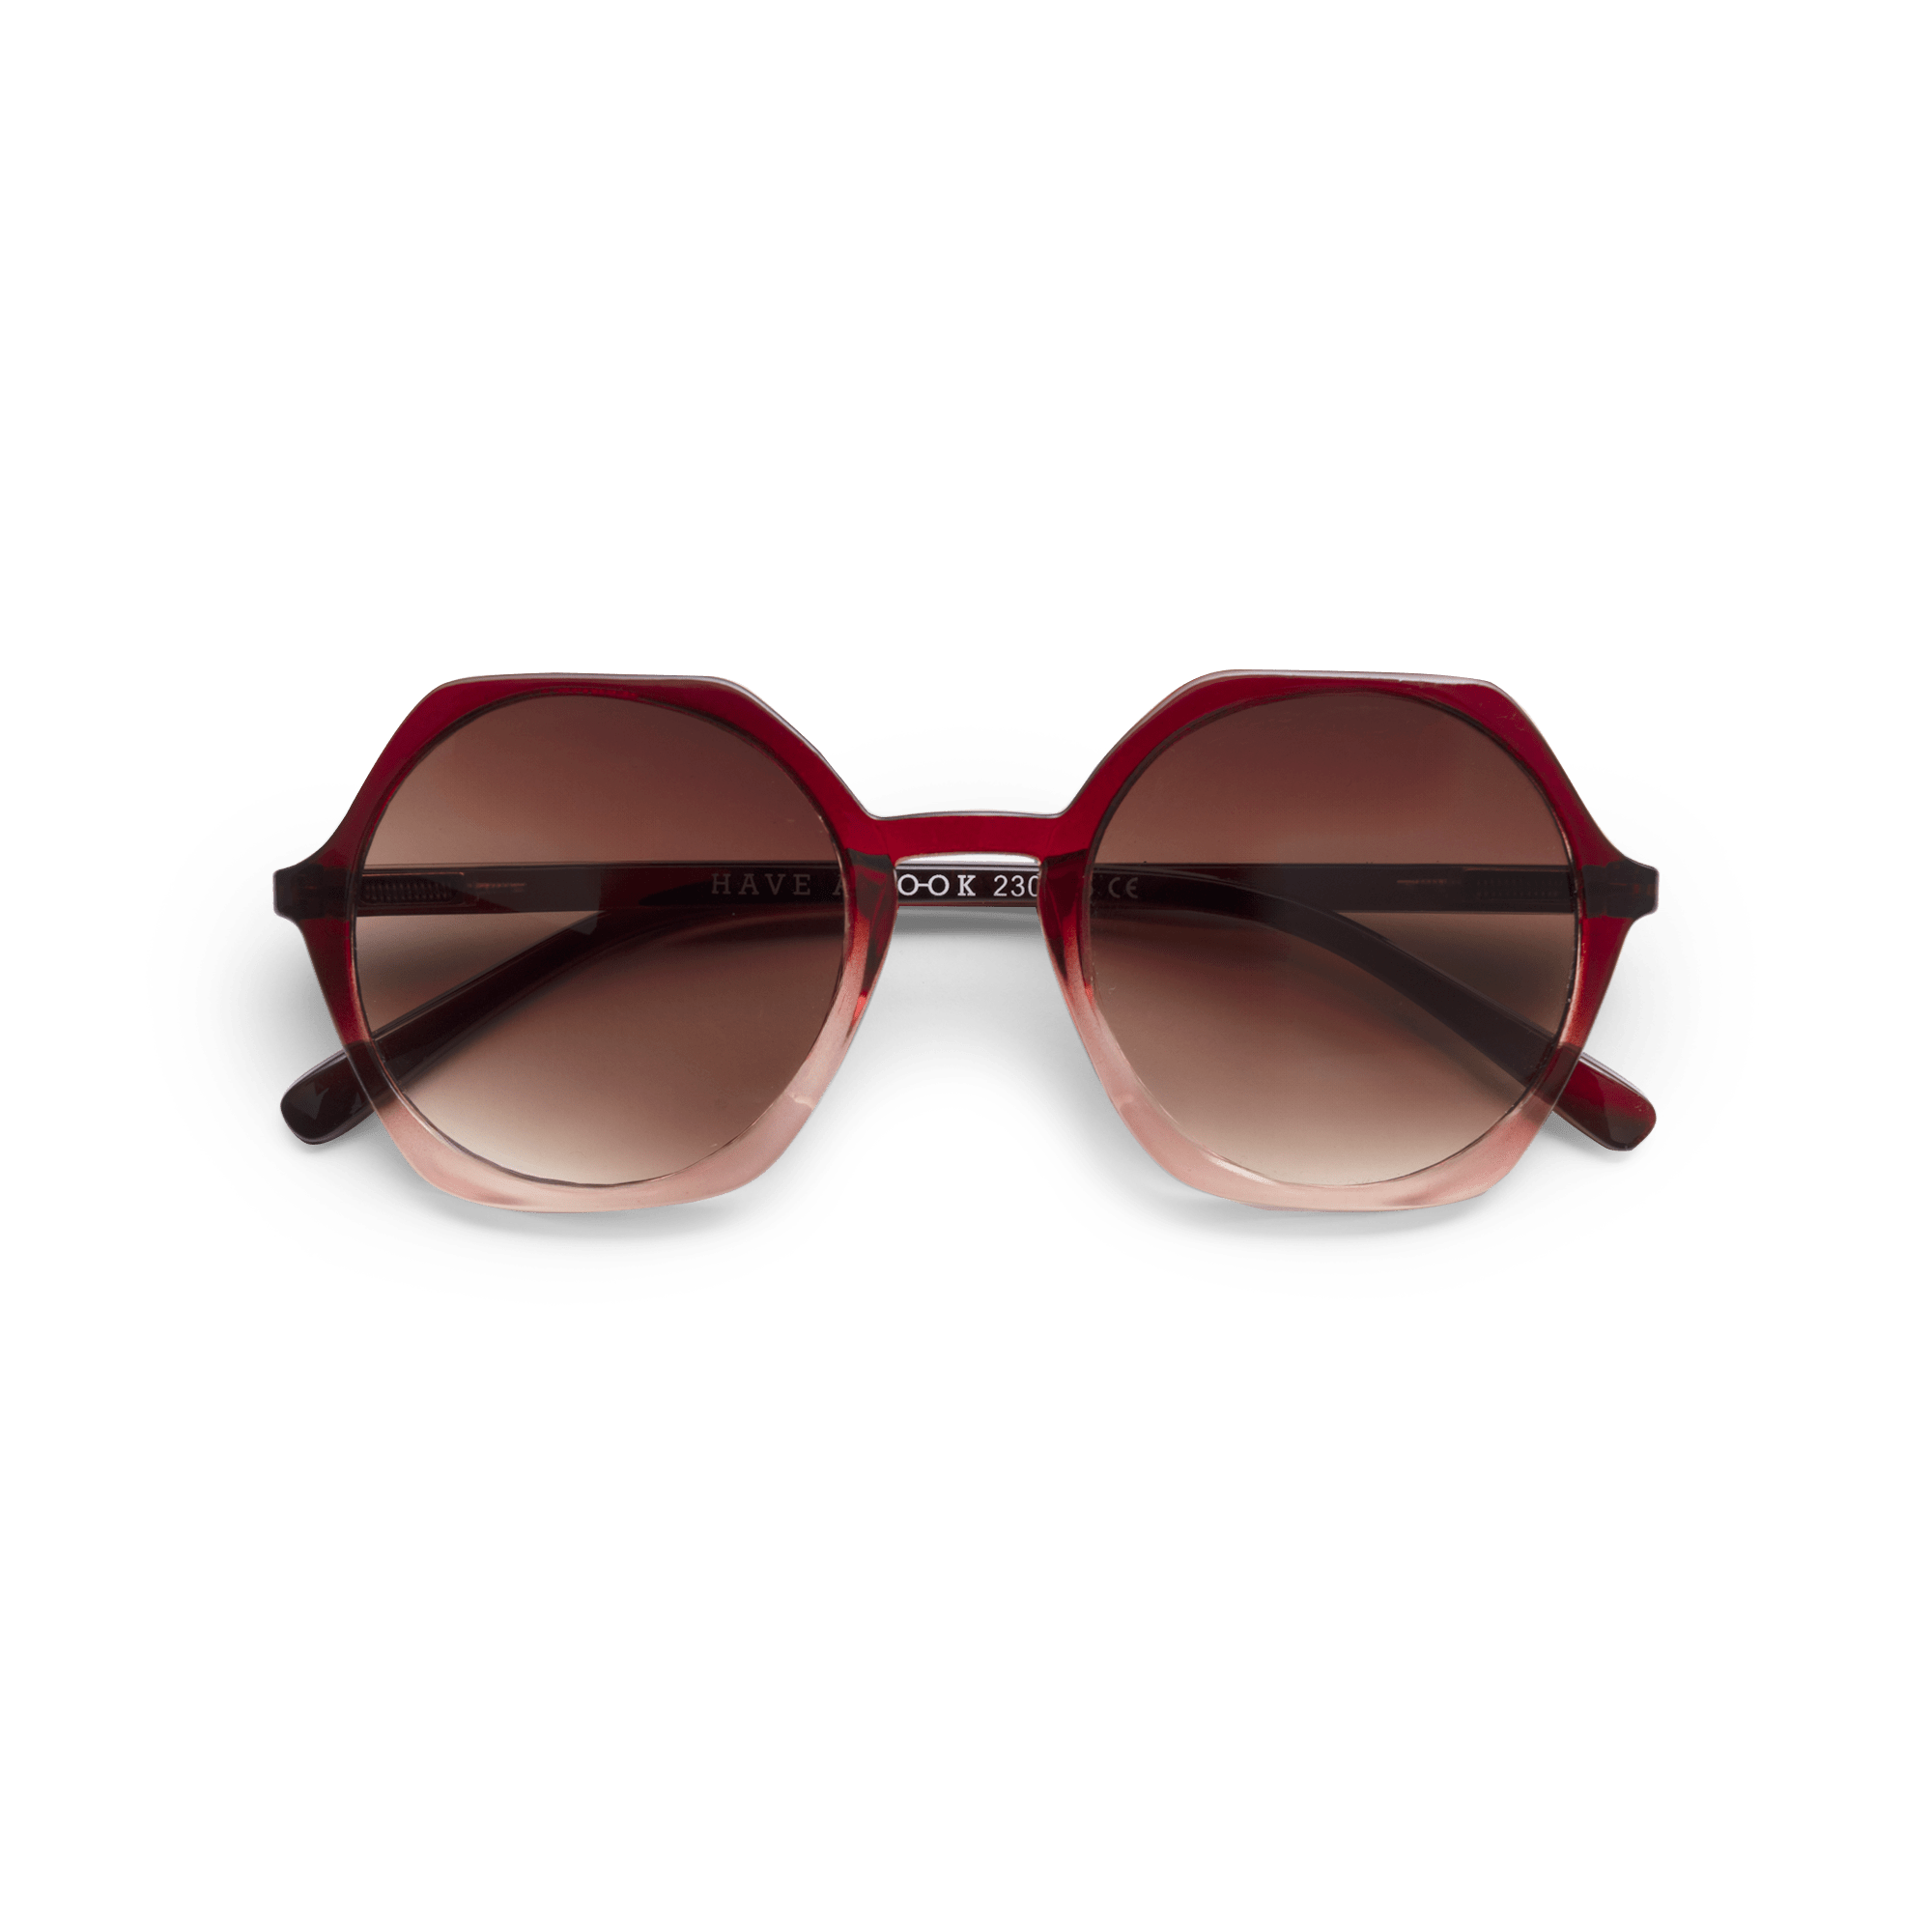 Sonnenfernbrillen Edgy - ruby aus Have A Look